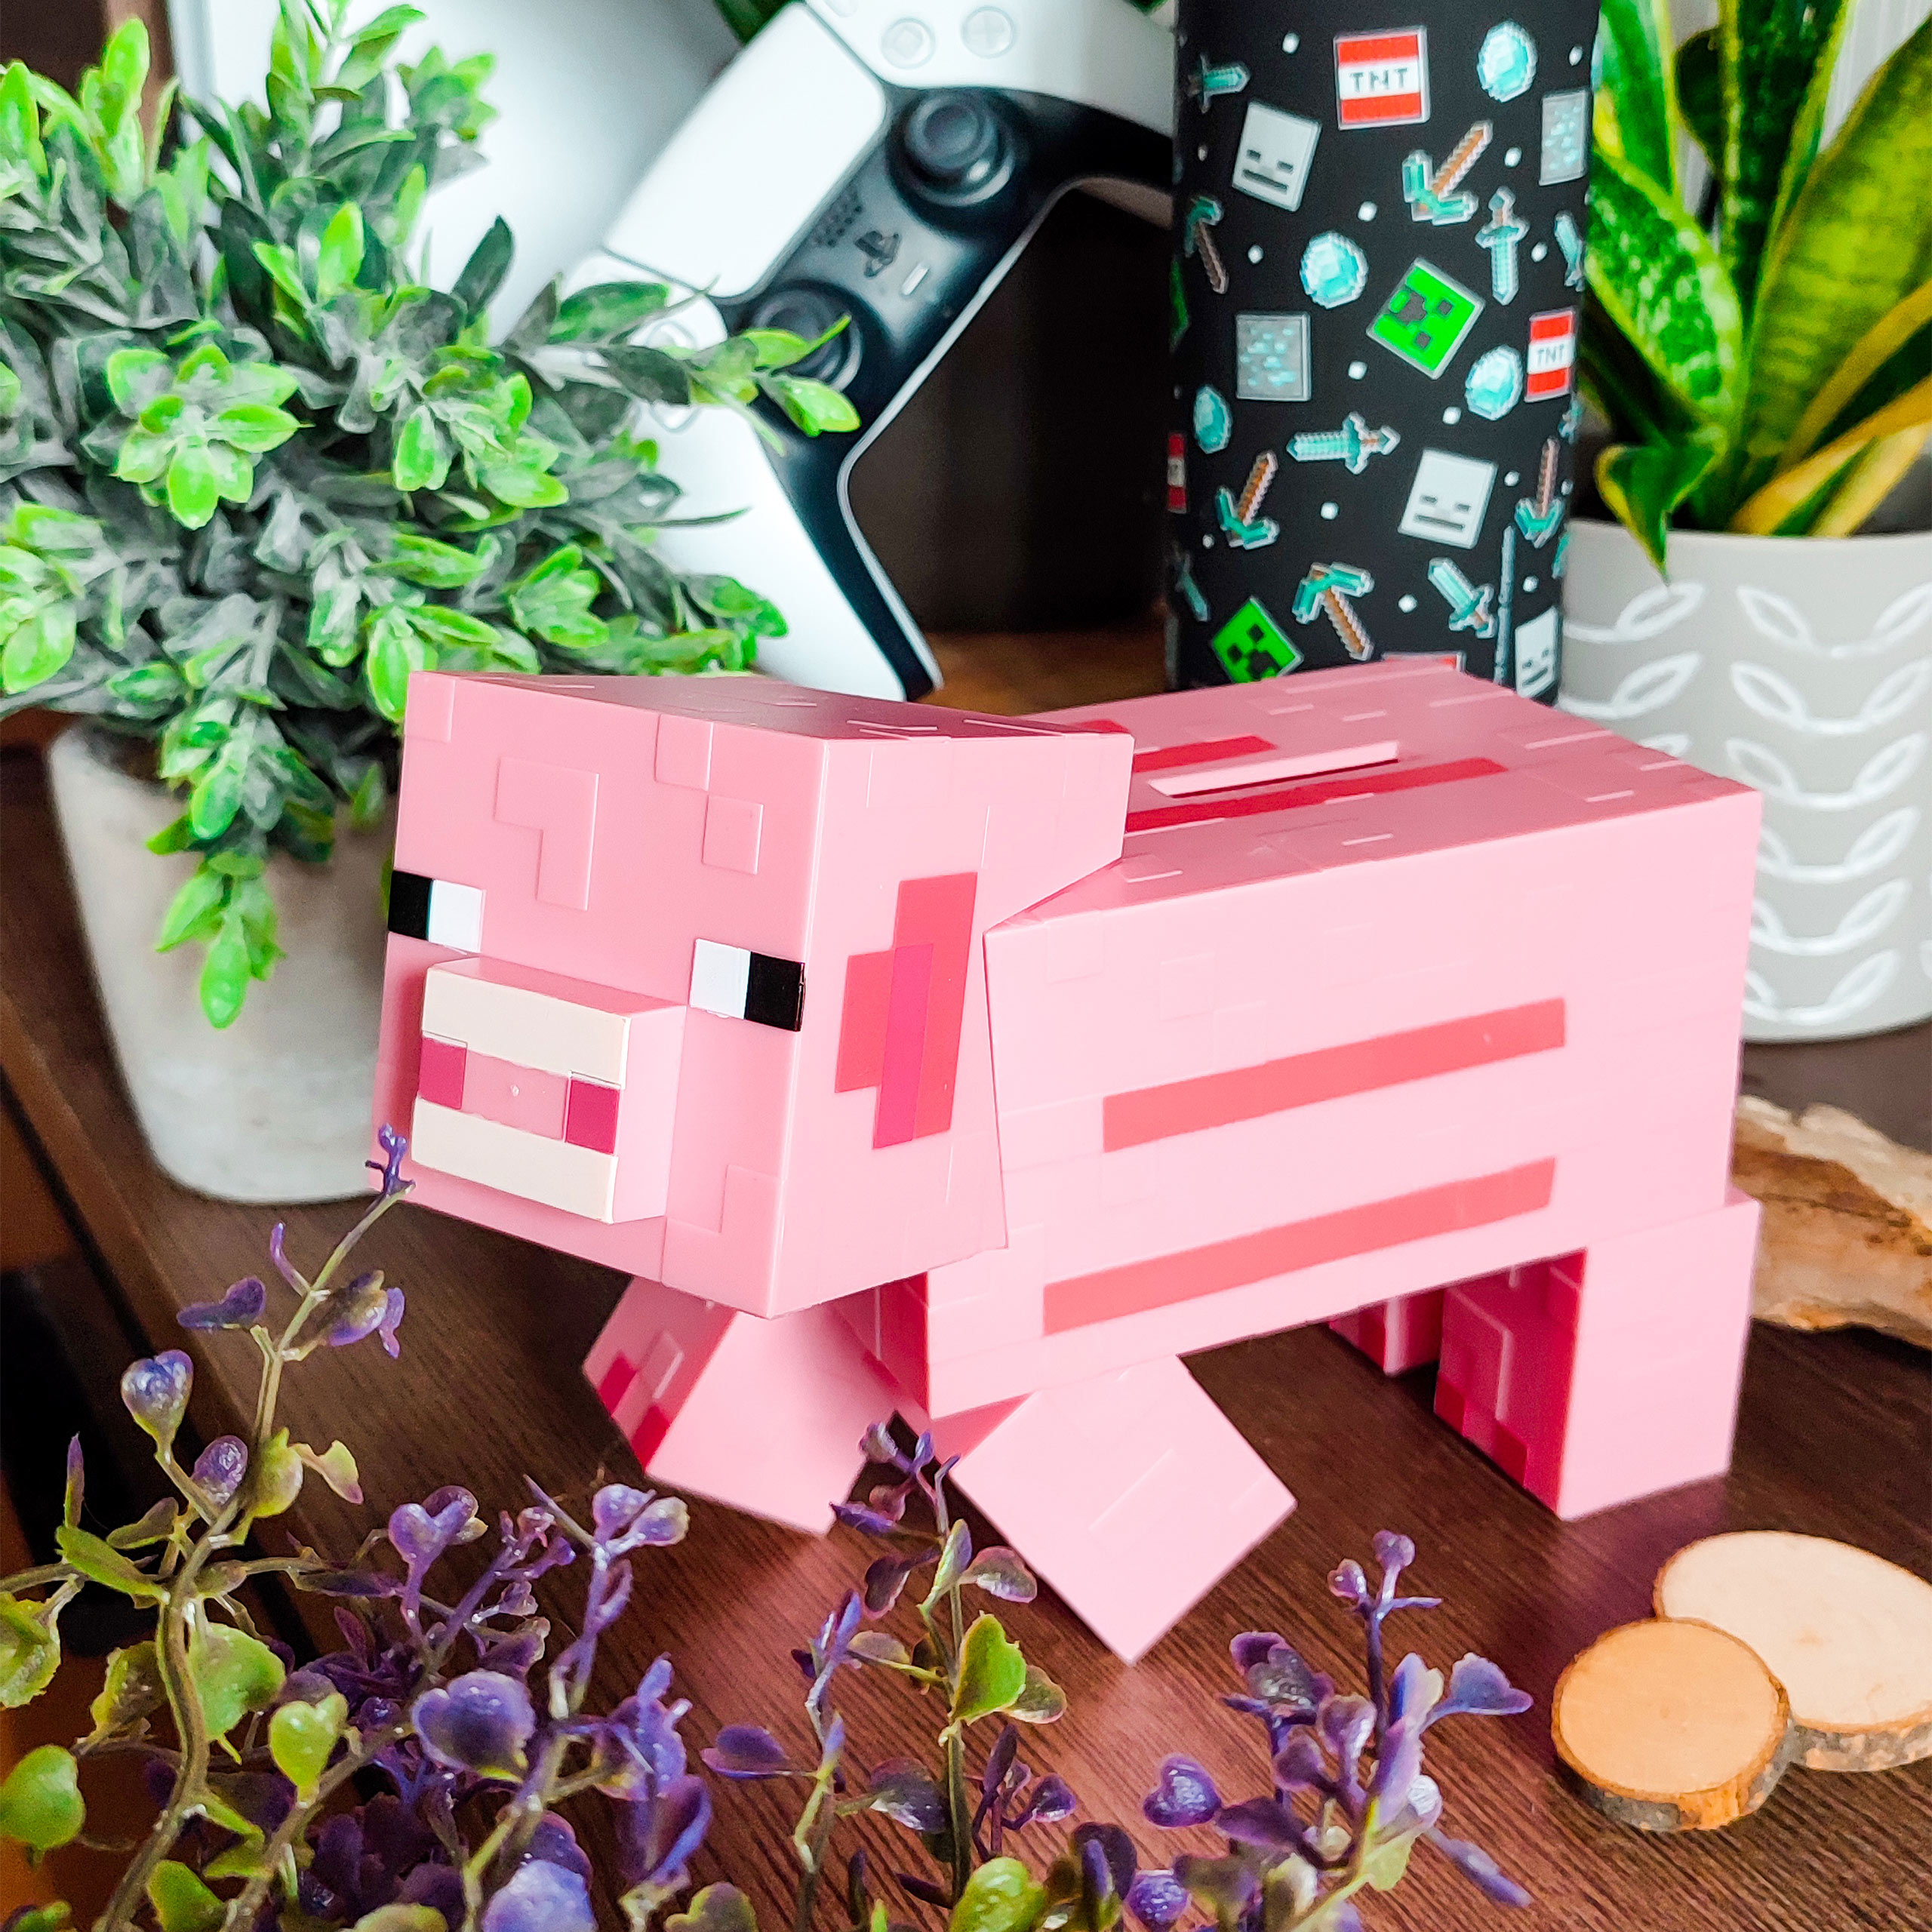 Minecraft - Pixel Piggy Bank